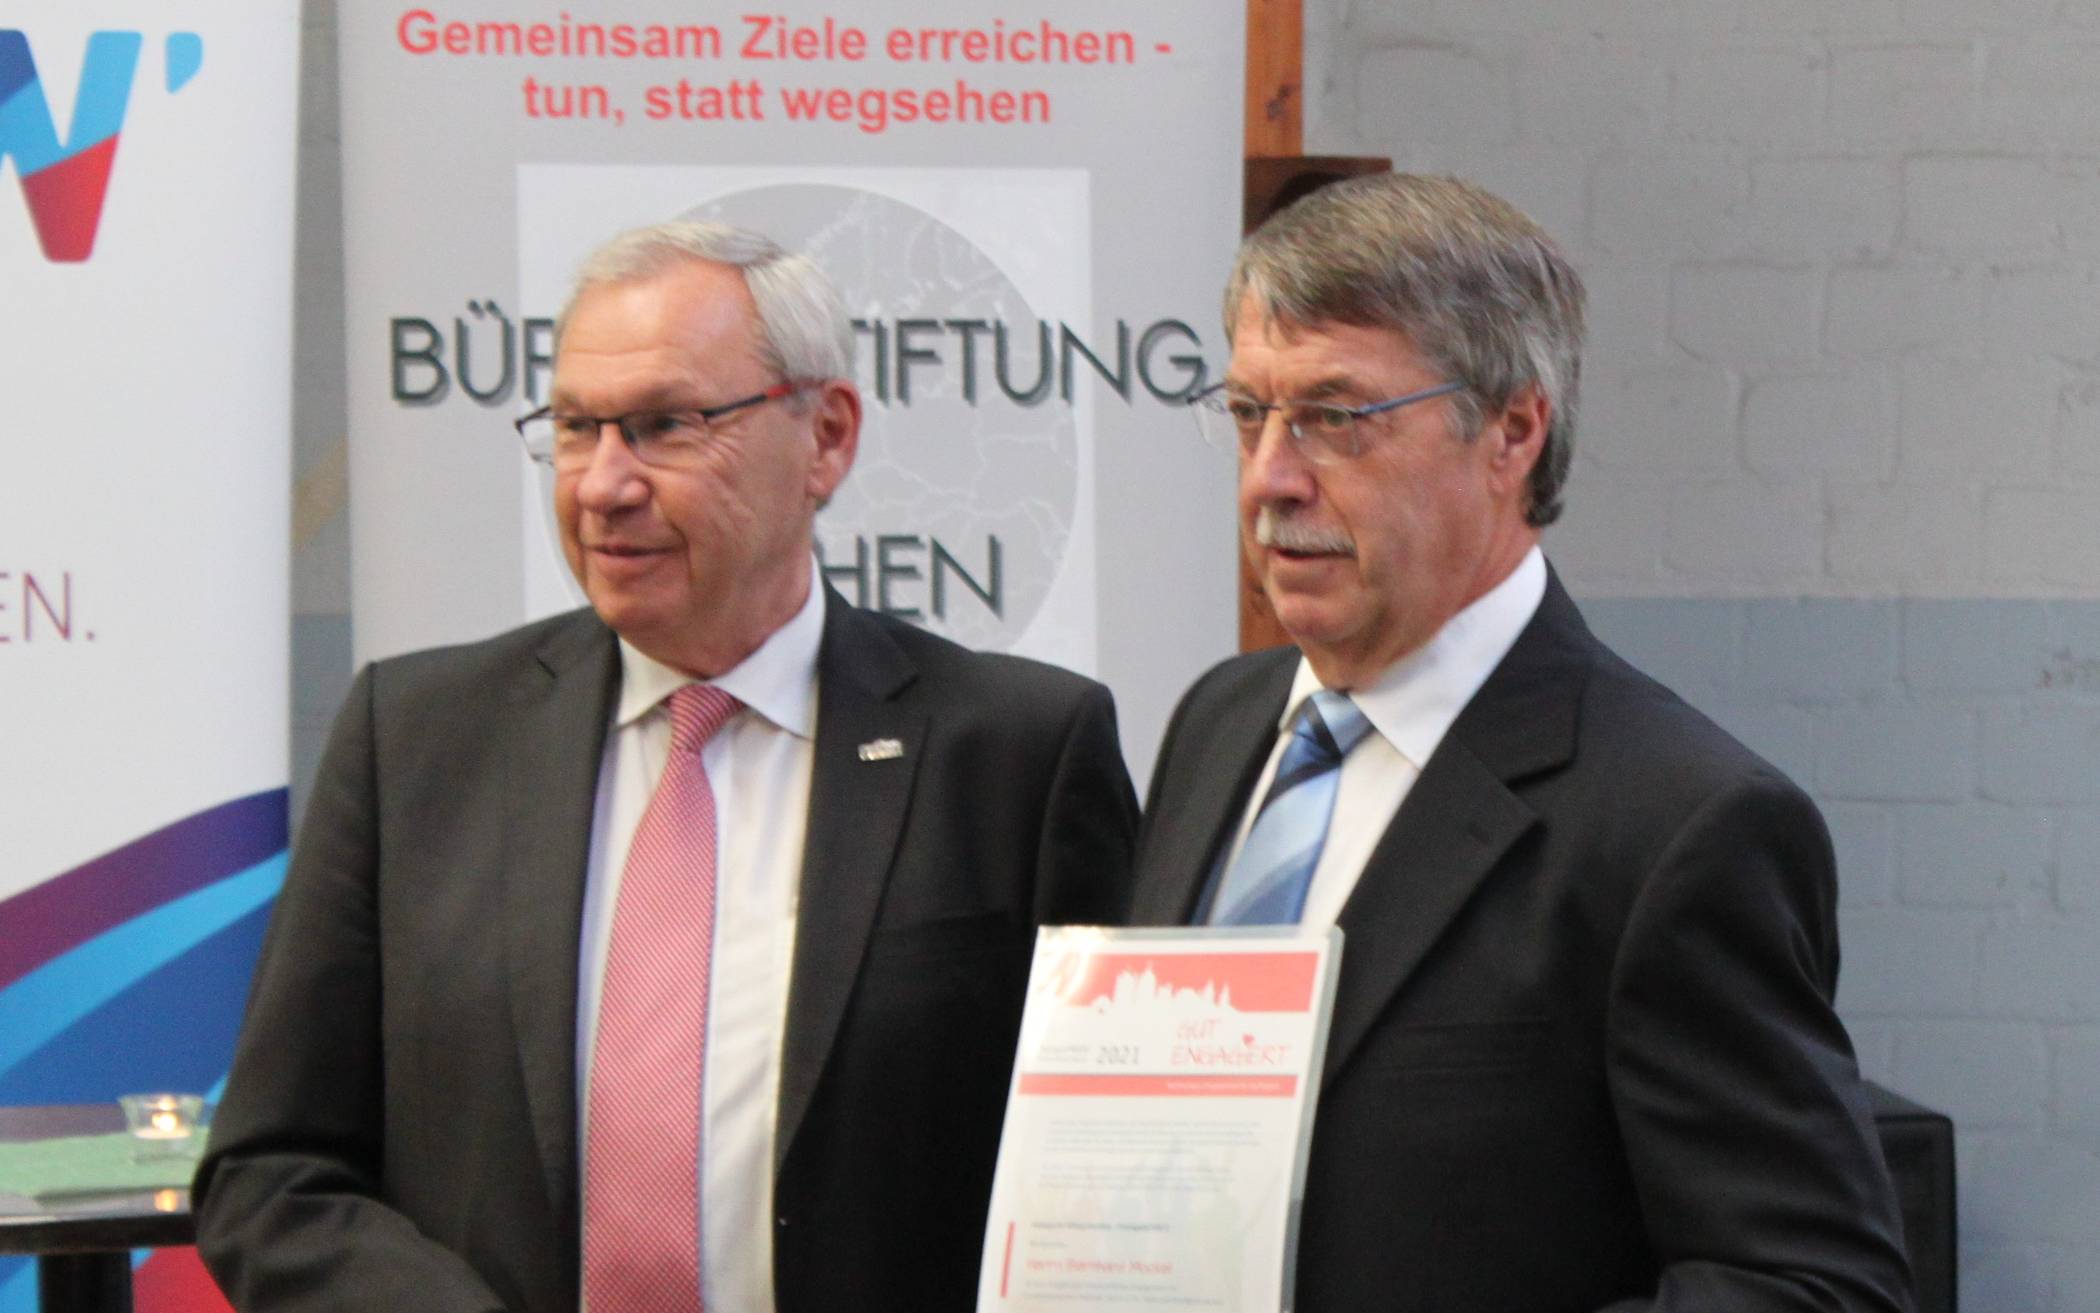  Joachim Drossert, Vorsitzender Bürgerstiftung Jüchen (links), hielt die Laudation auf Preisträger Bernd Mockel. 
  